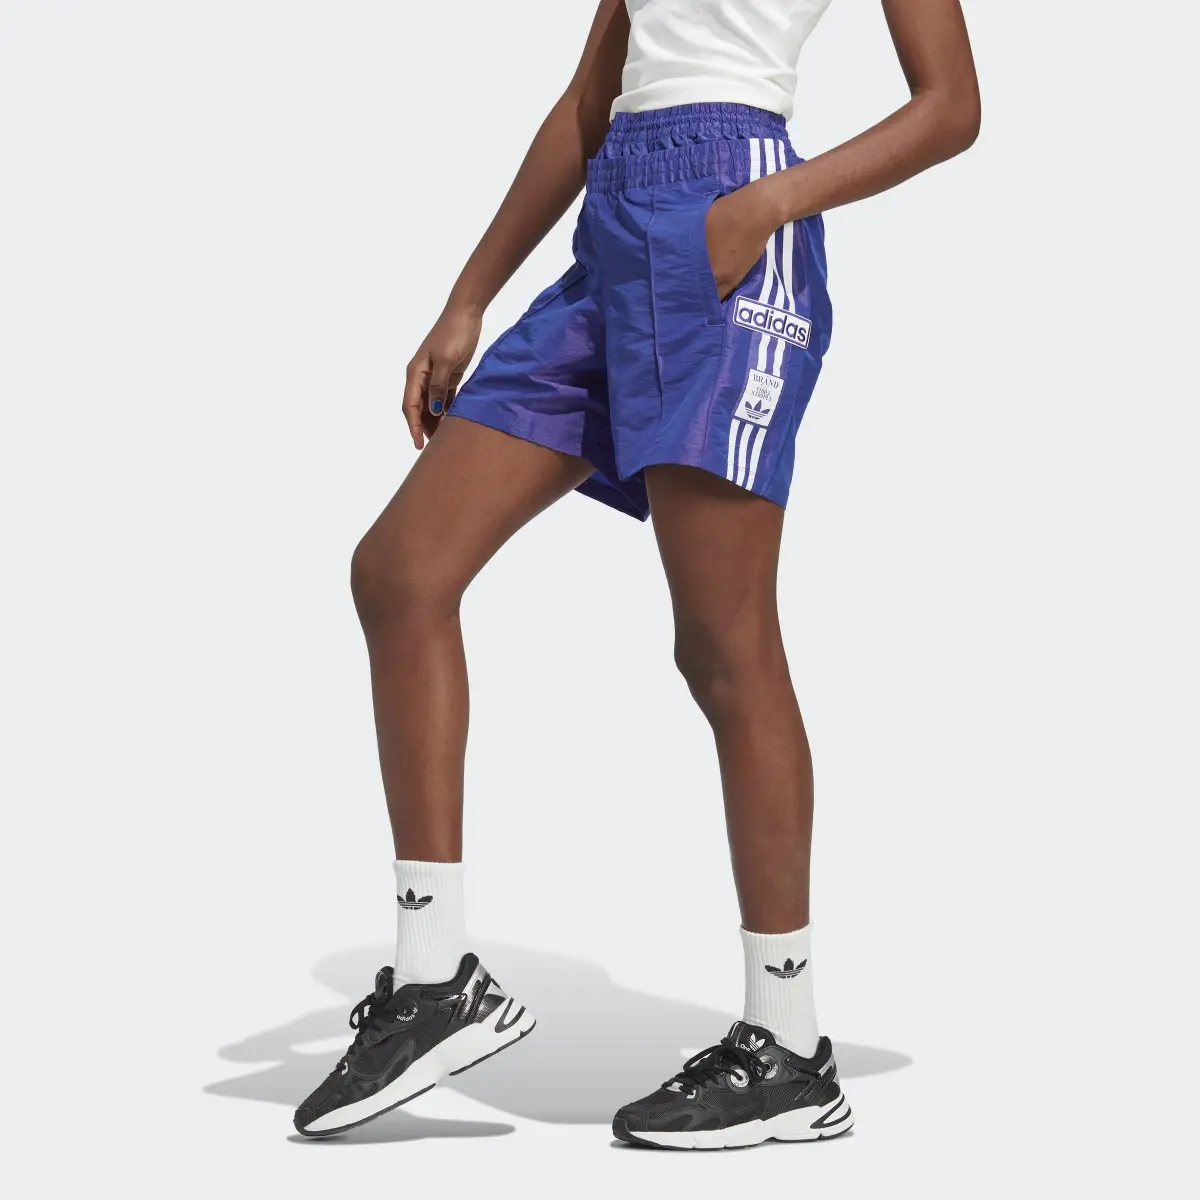 Adidas Always Original Shorts. 1